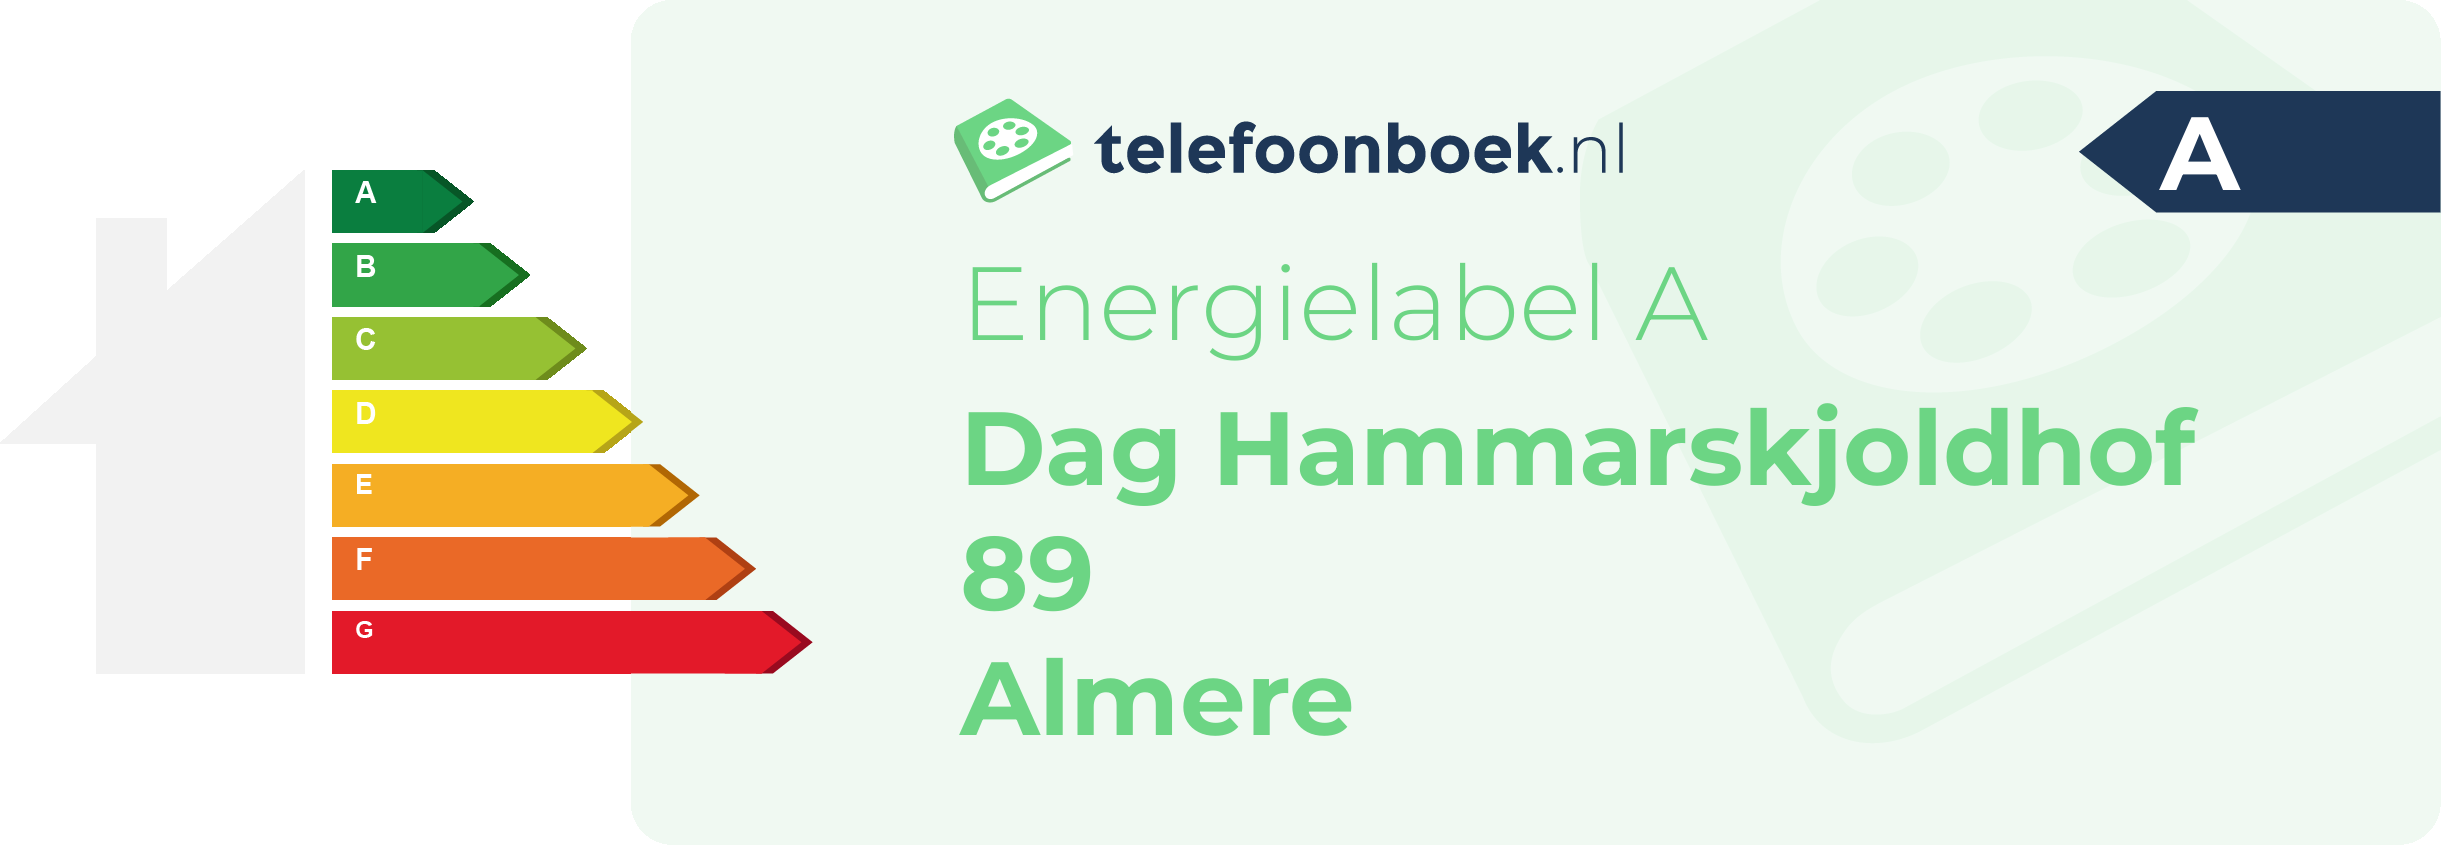 Energielabel Dag Hammarskjoldhof 89 Almere